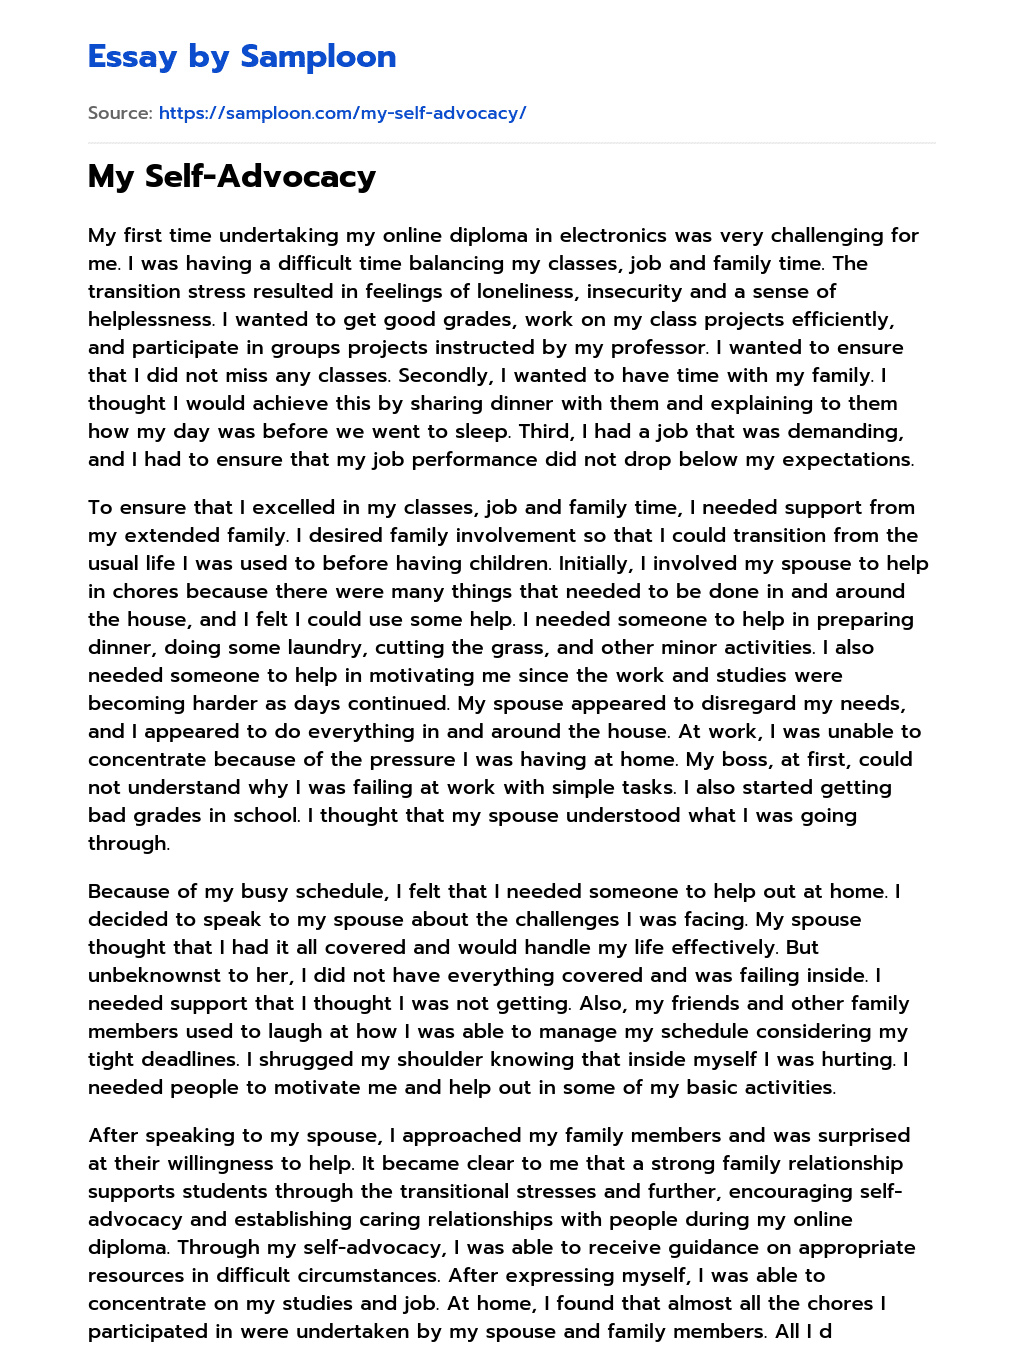 My Self-Advocacy Personal Essay essay